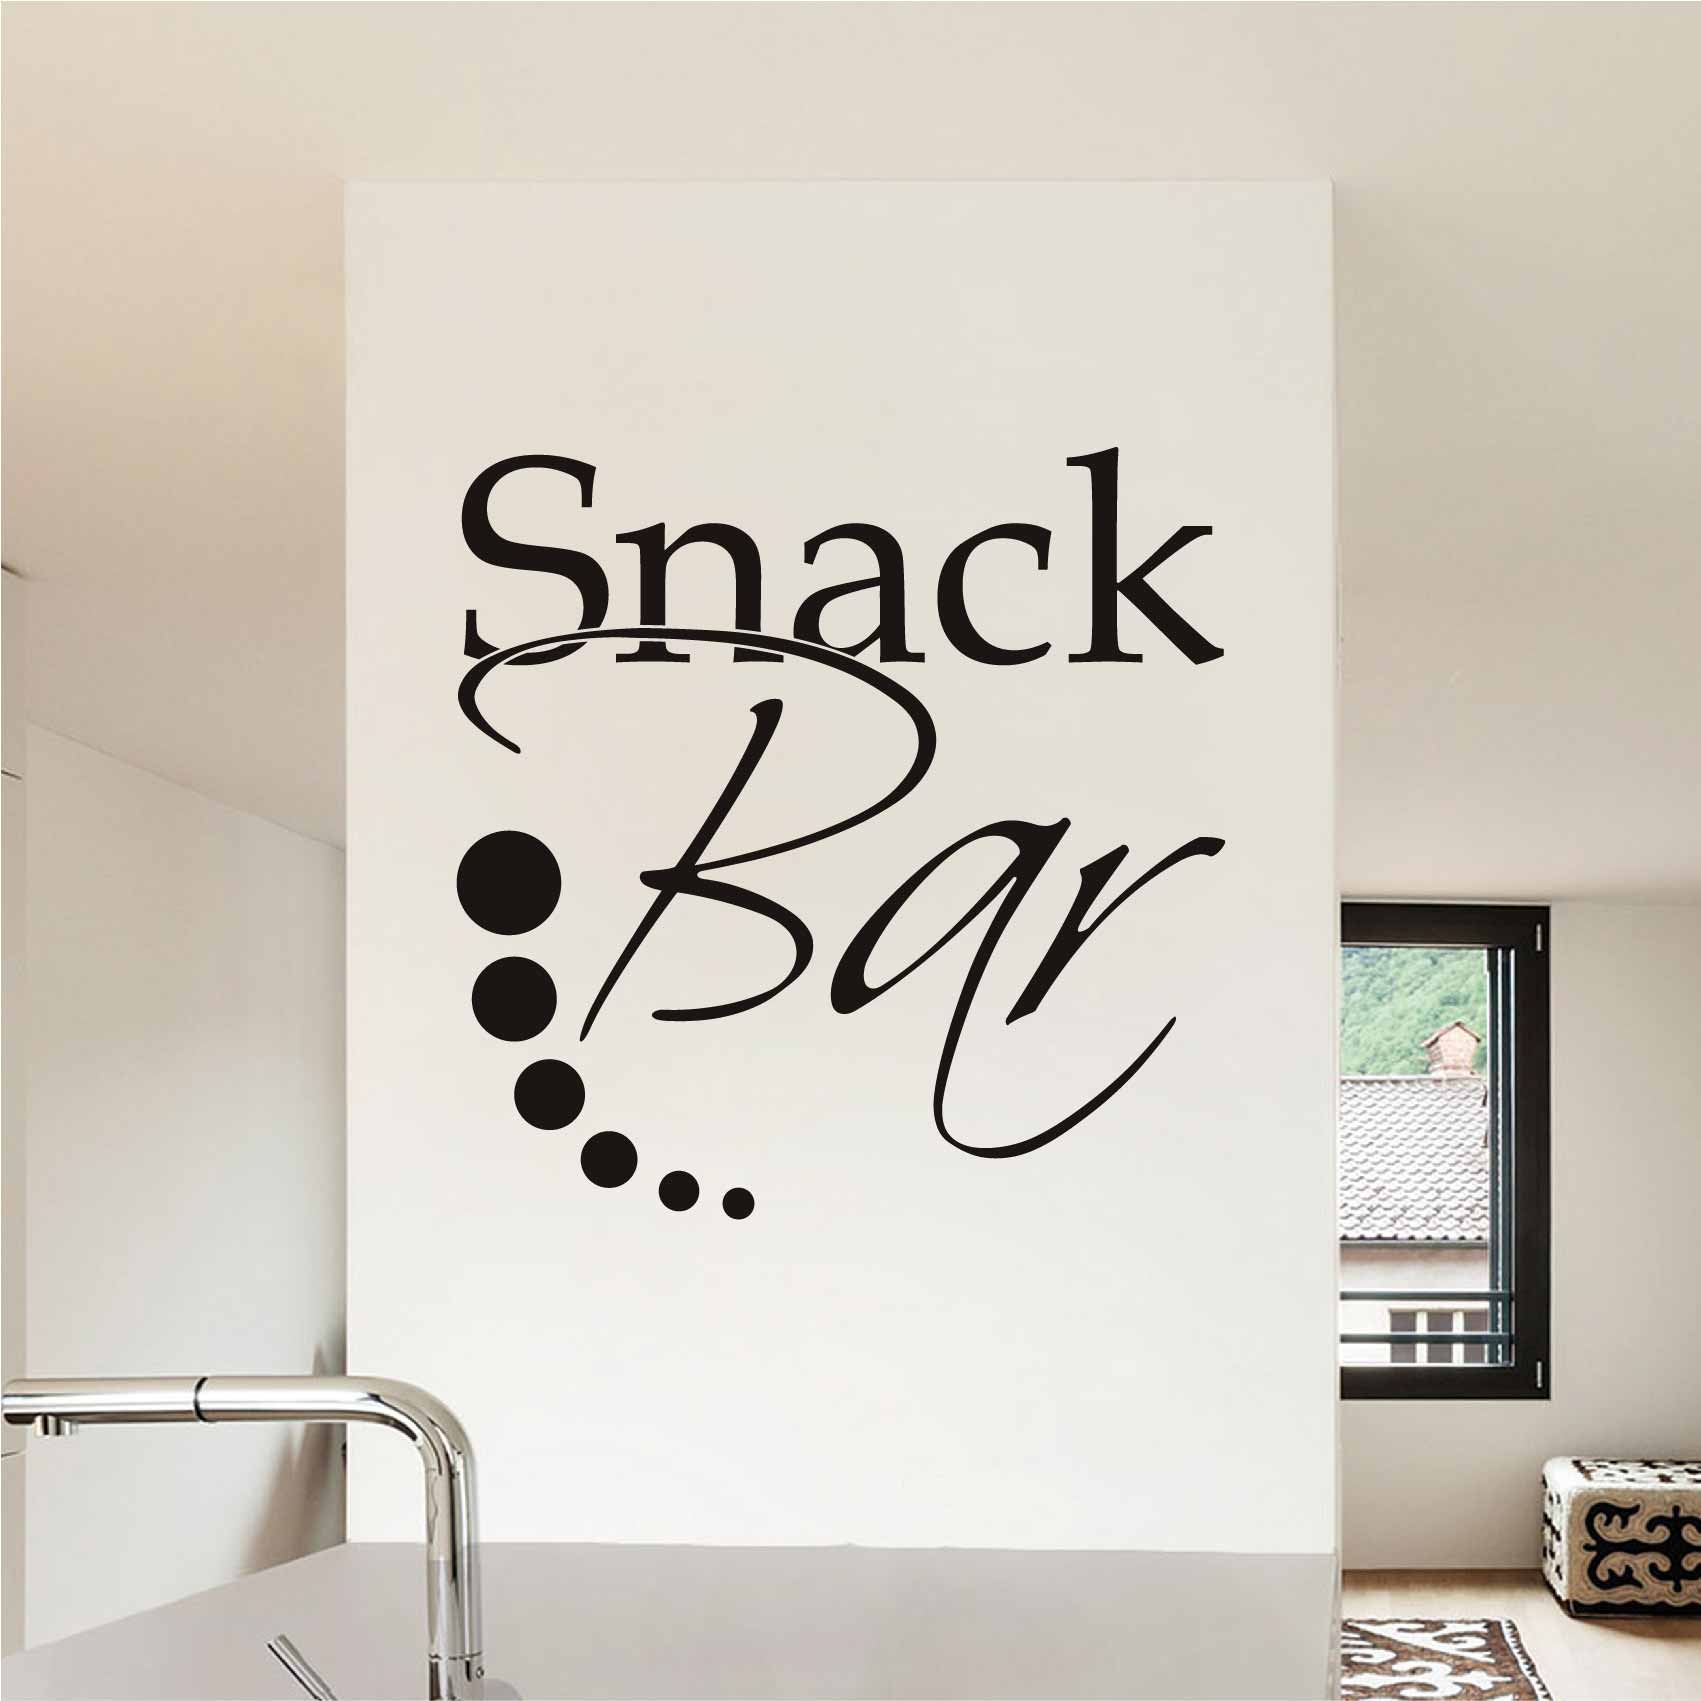 stickers-cuisine-snack-bar-ref24cuisine-autocollant-muraux-cuisine-kitchen-sticker-mural-deco-decoration